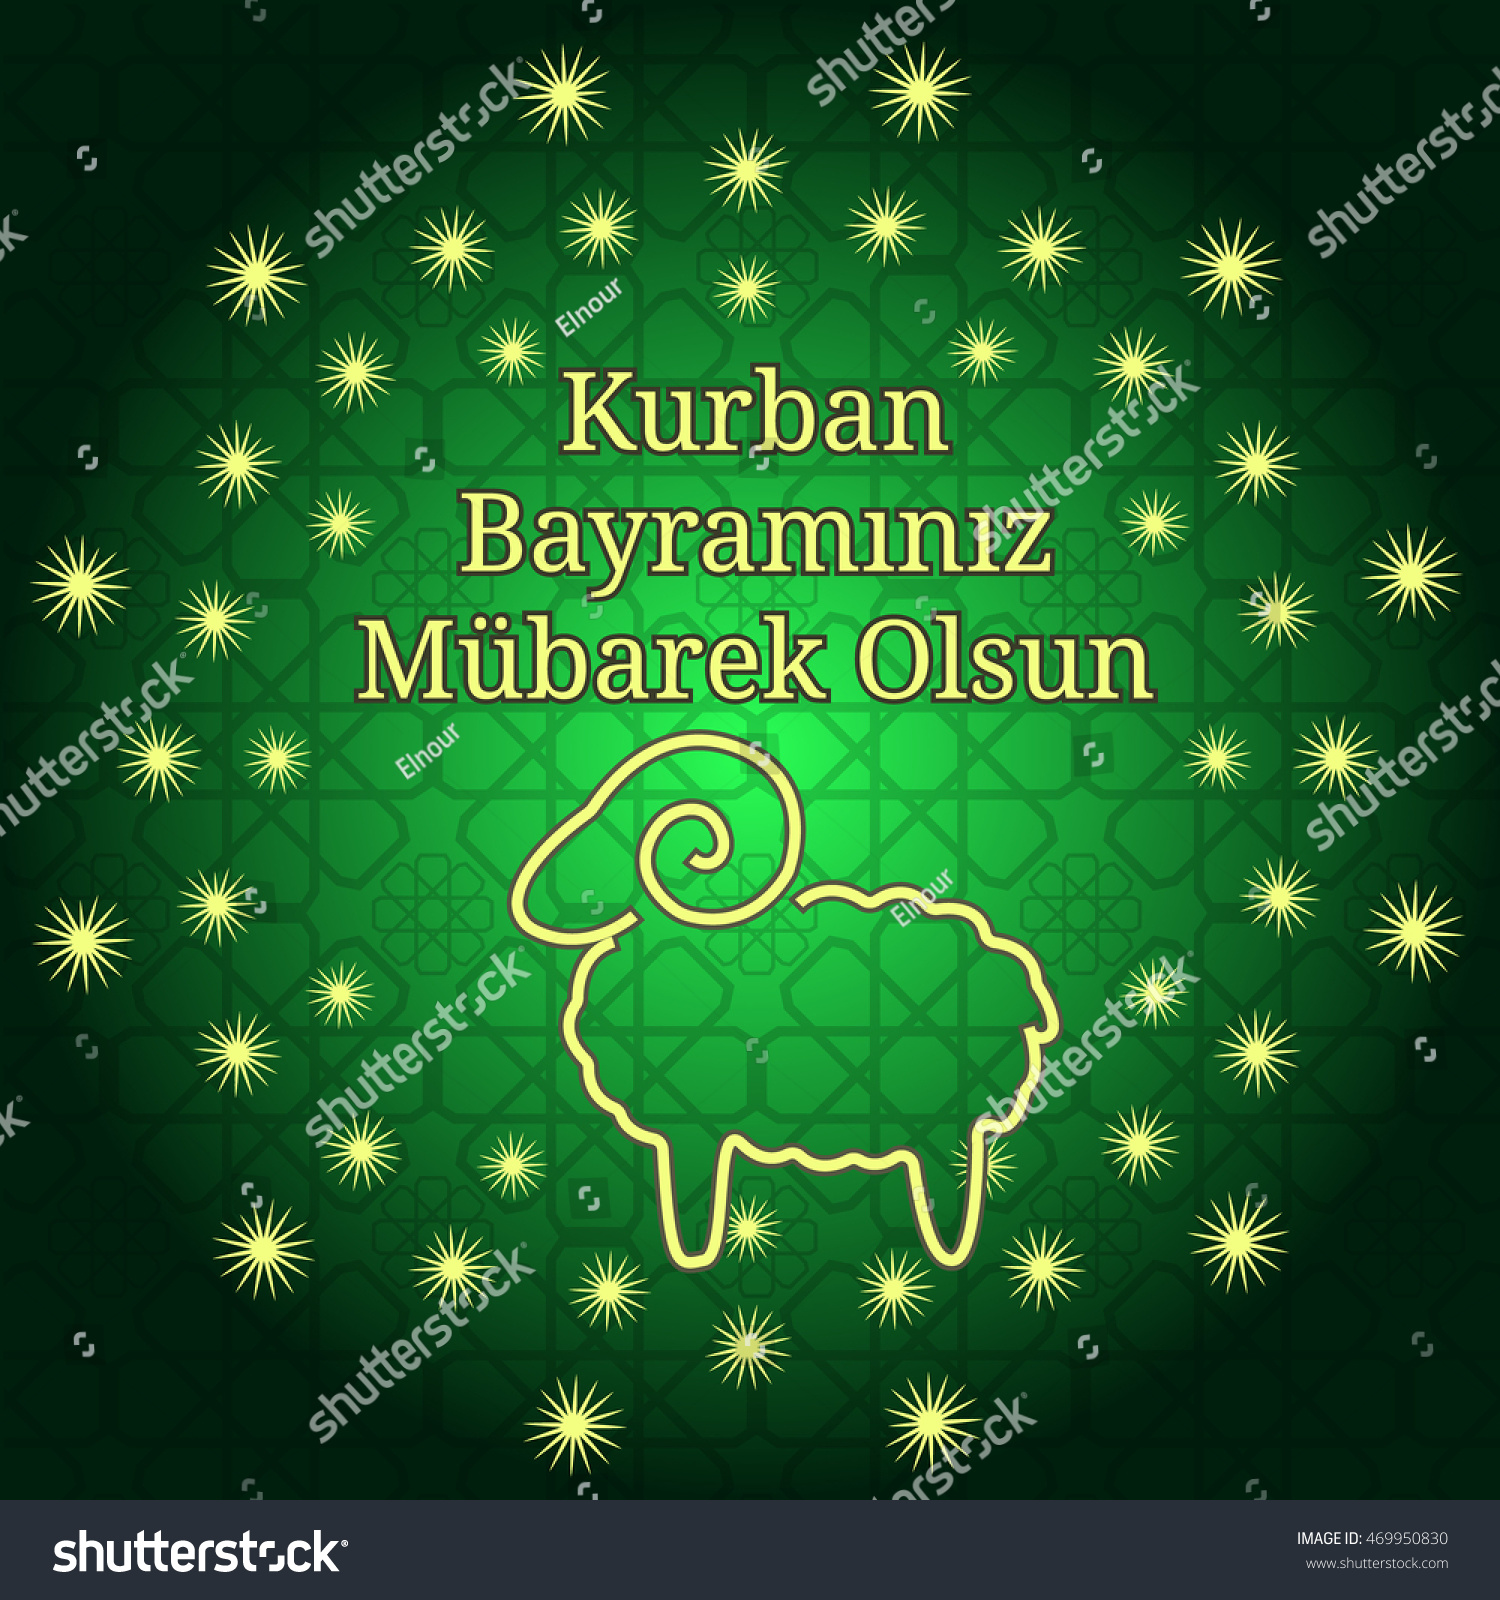 Muslim Community Kurban Bayram Festival Sacrifice Stock Vector (Royalty